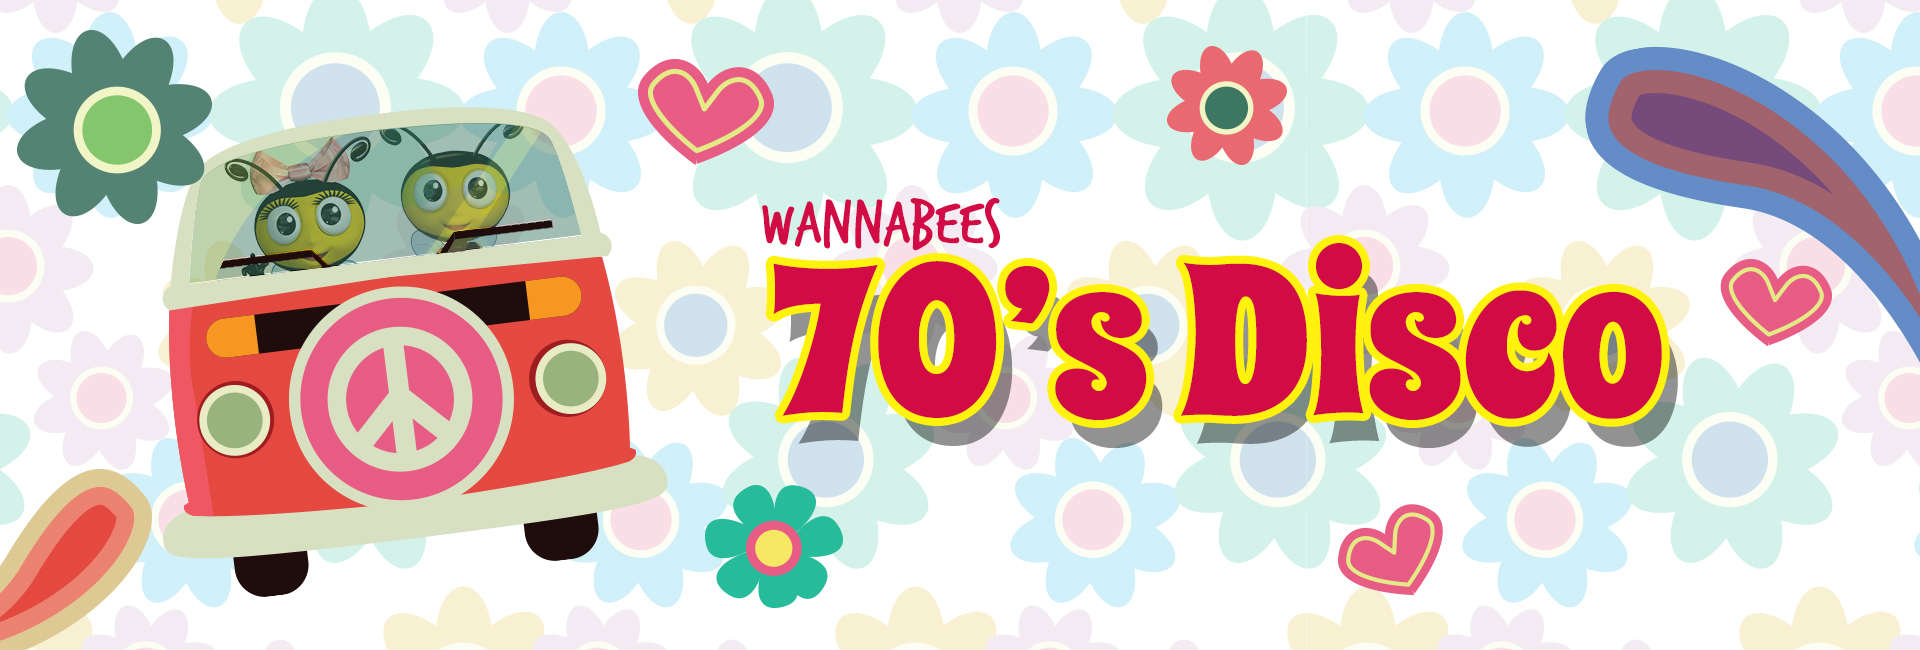 Wannabees Kids Disco - 70s optimised